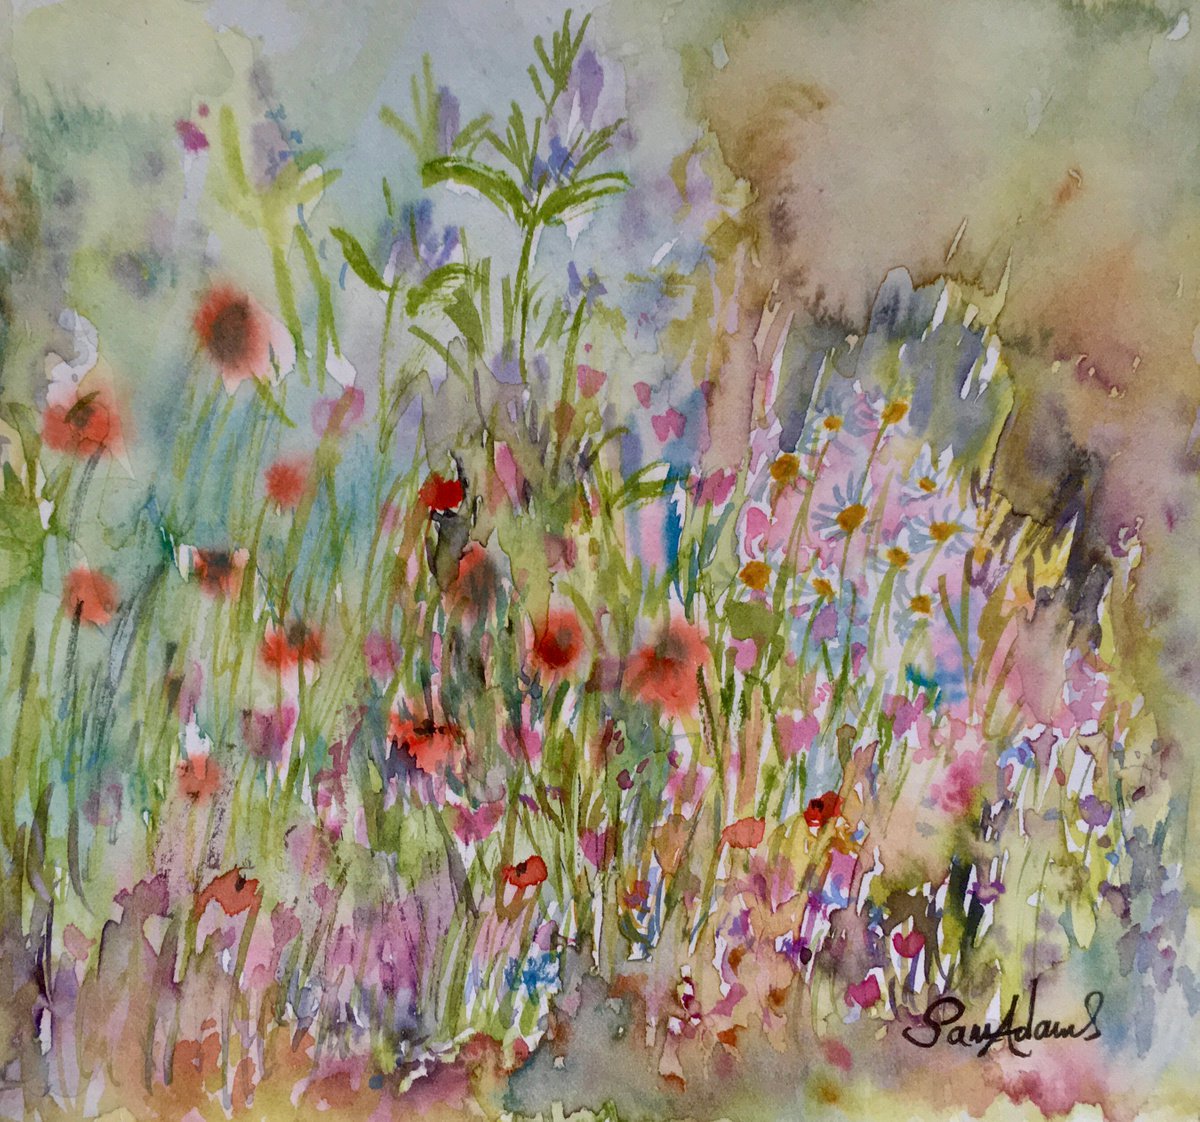 Dainty flowers by Samantha Adams professional watercolorist